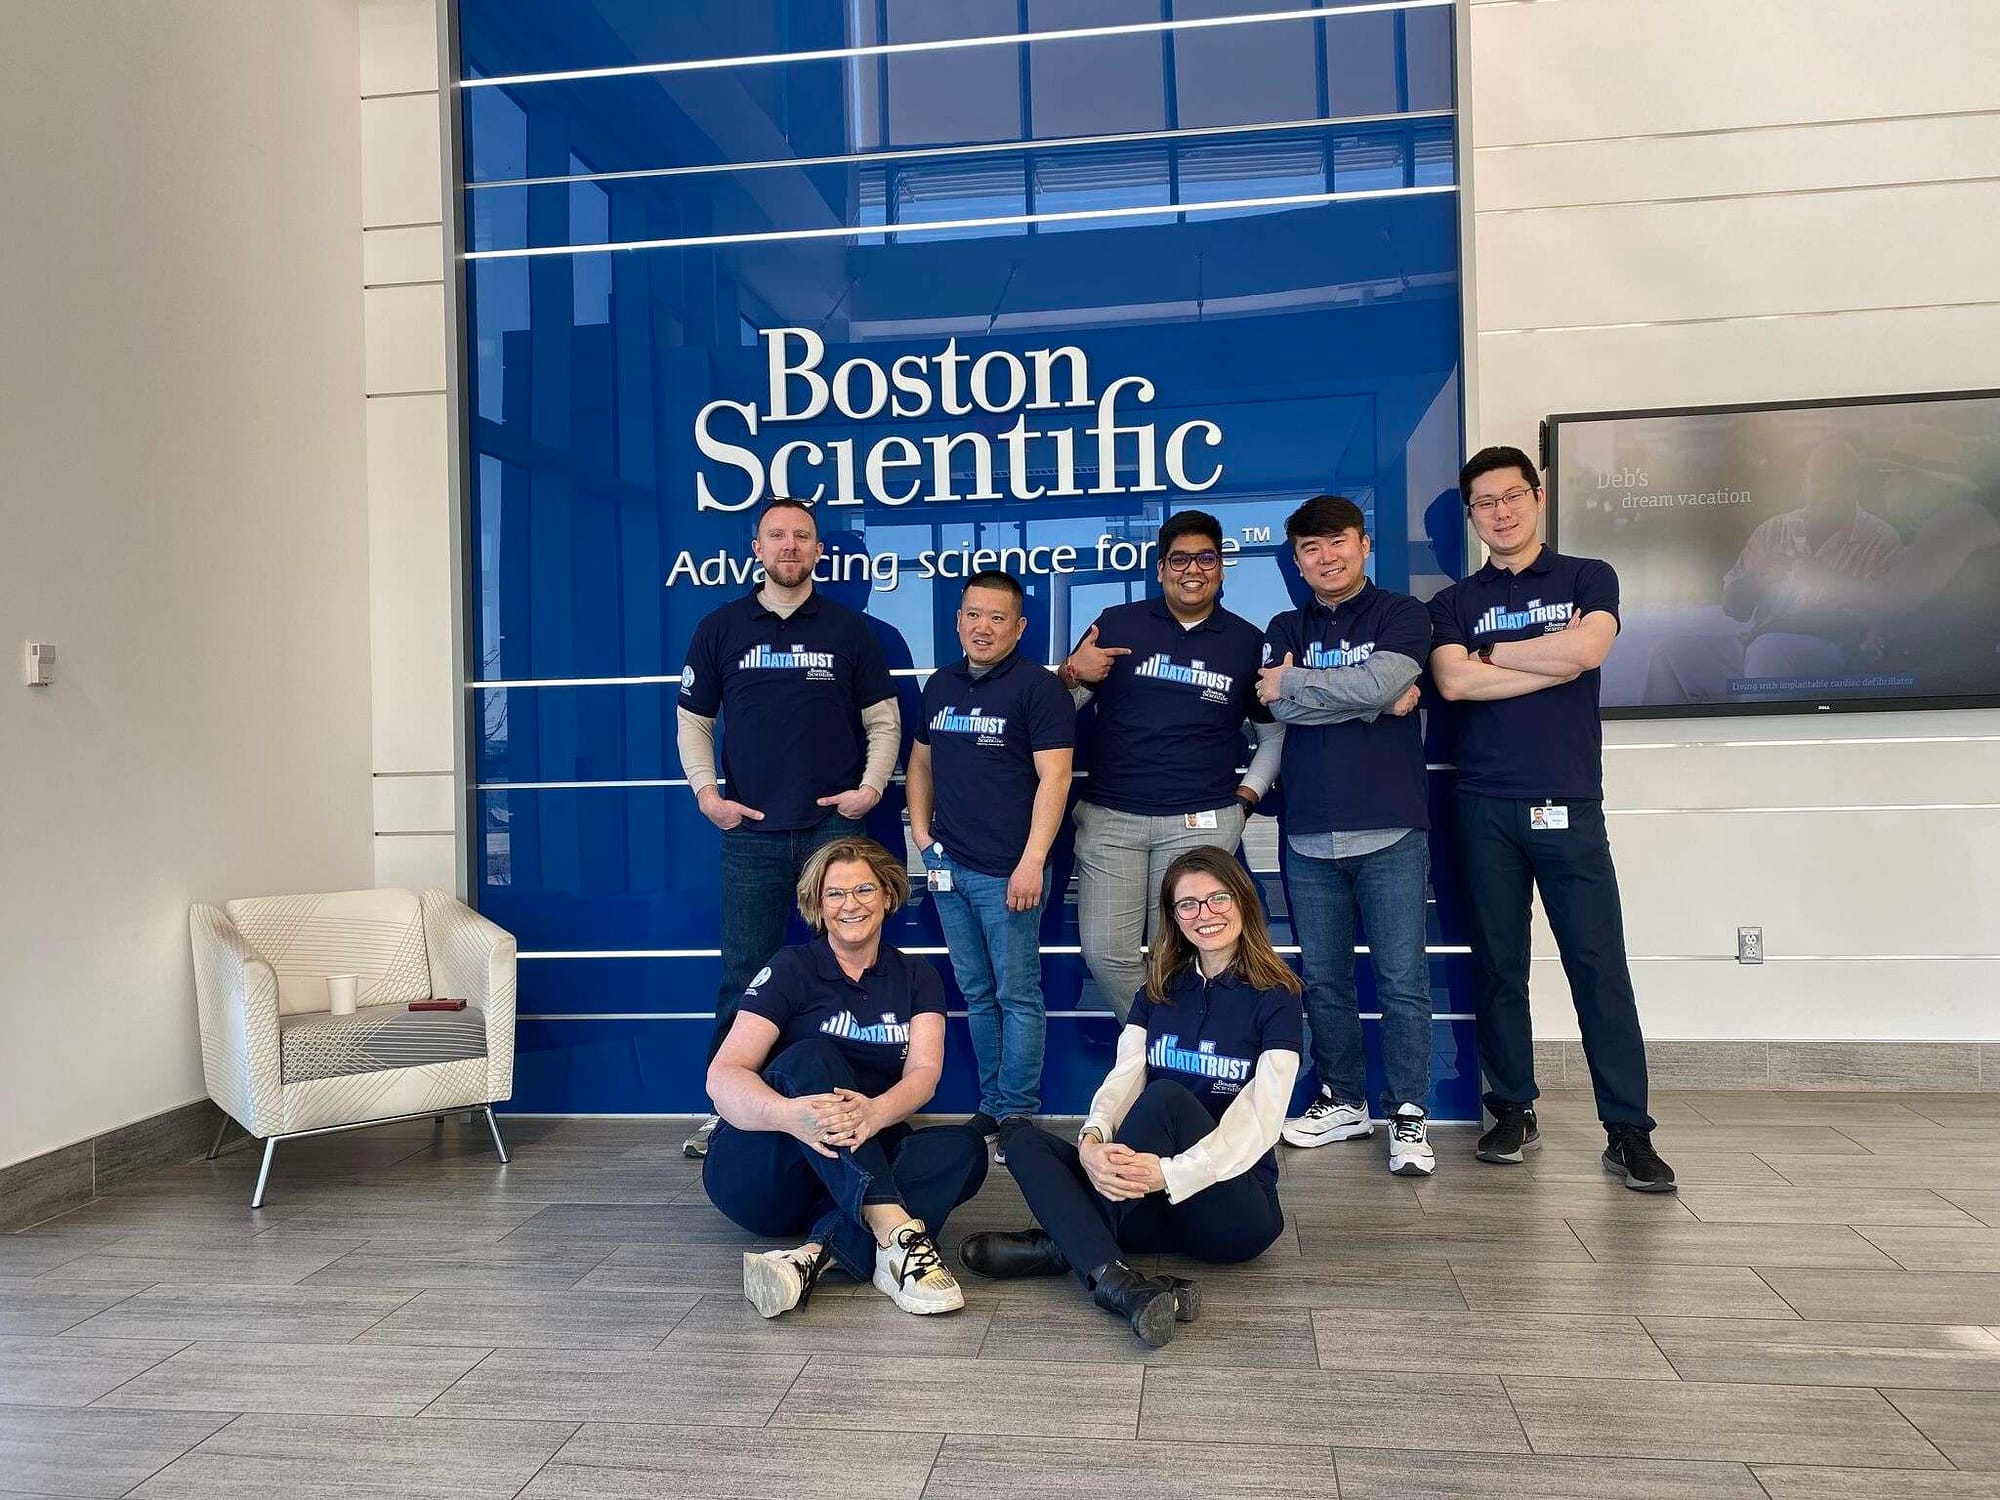 Boston Scientific employer branding
